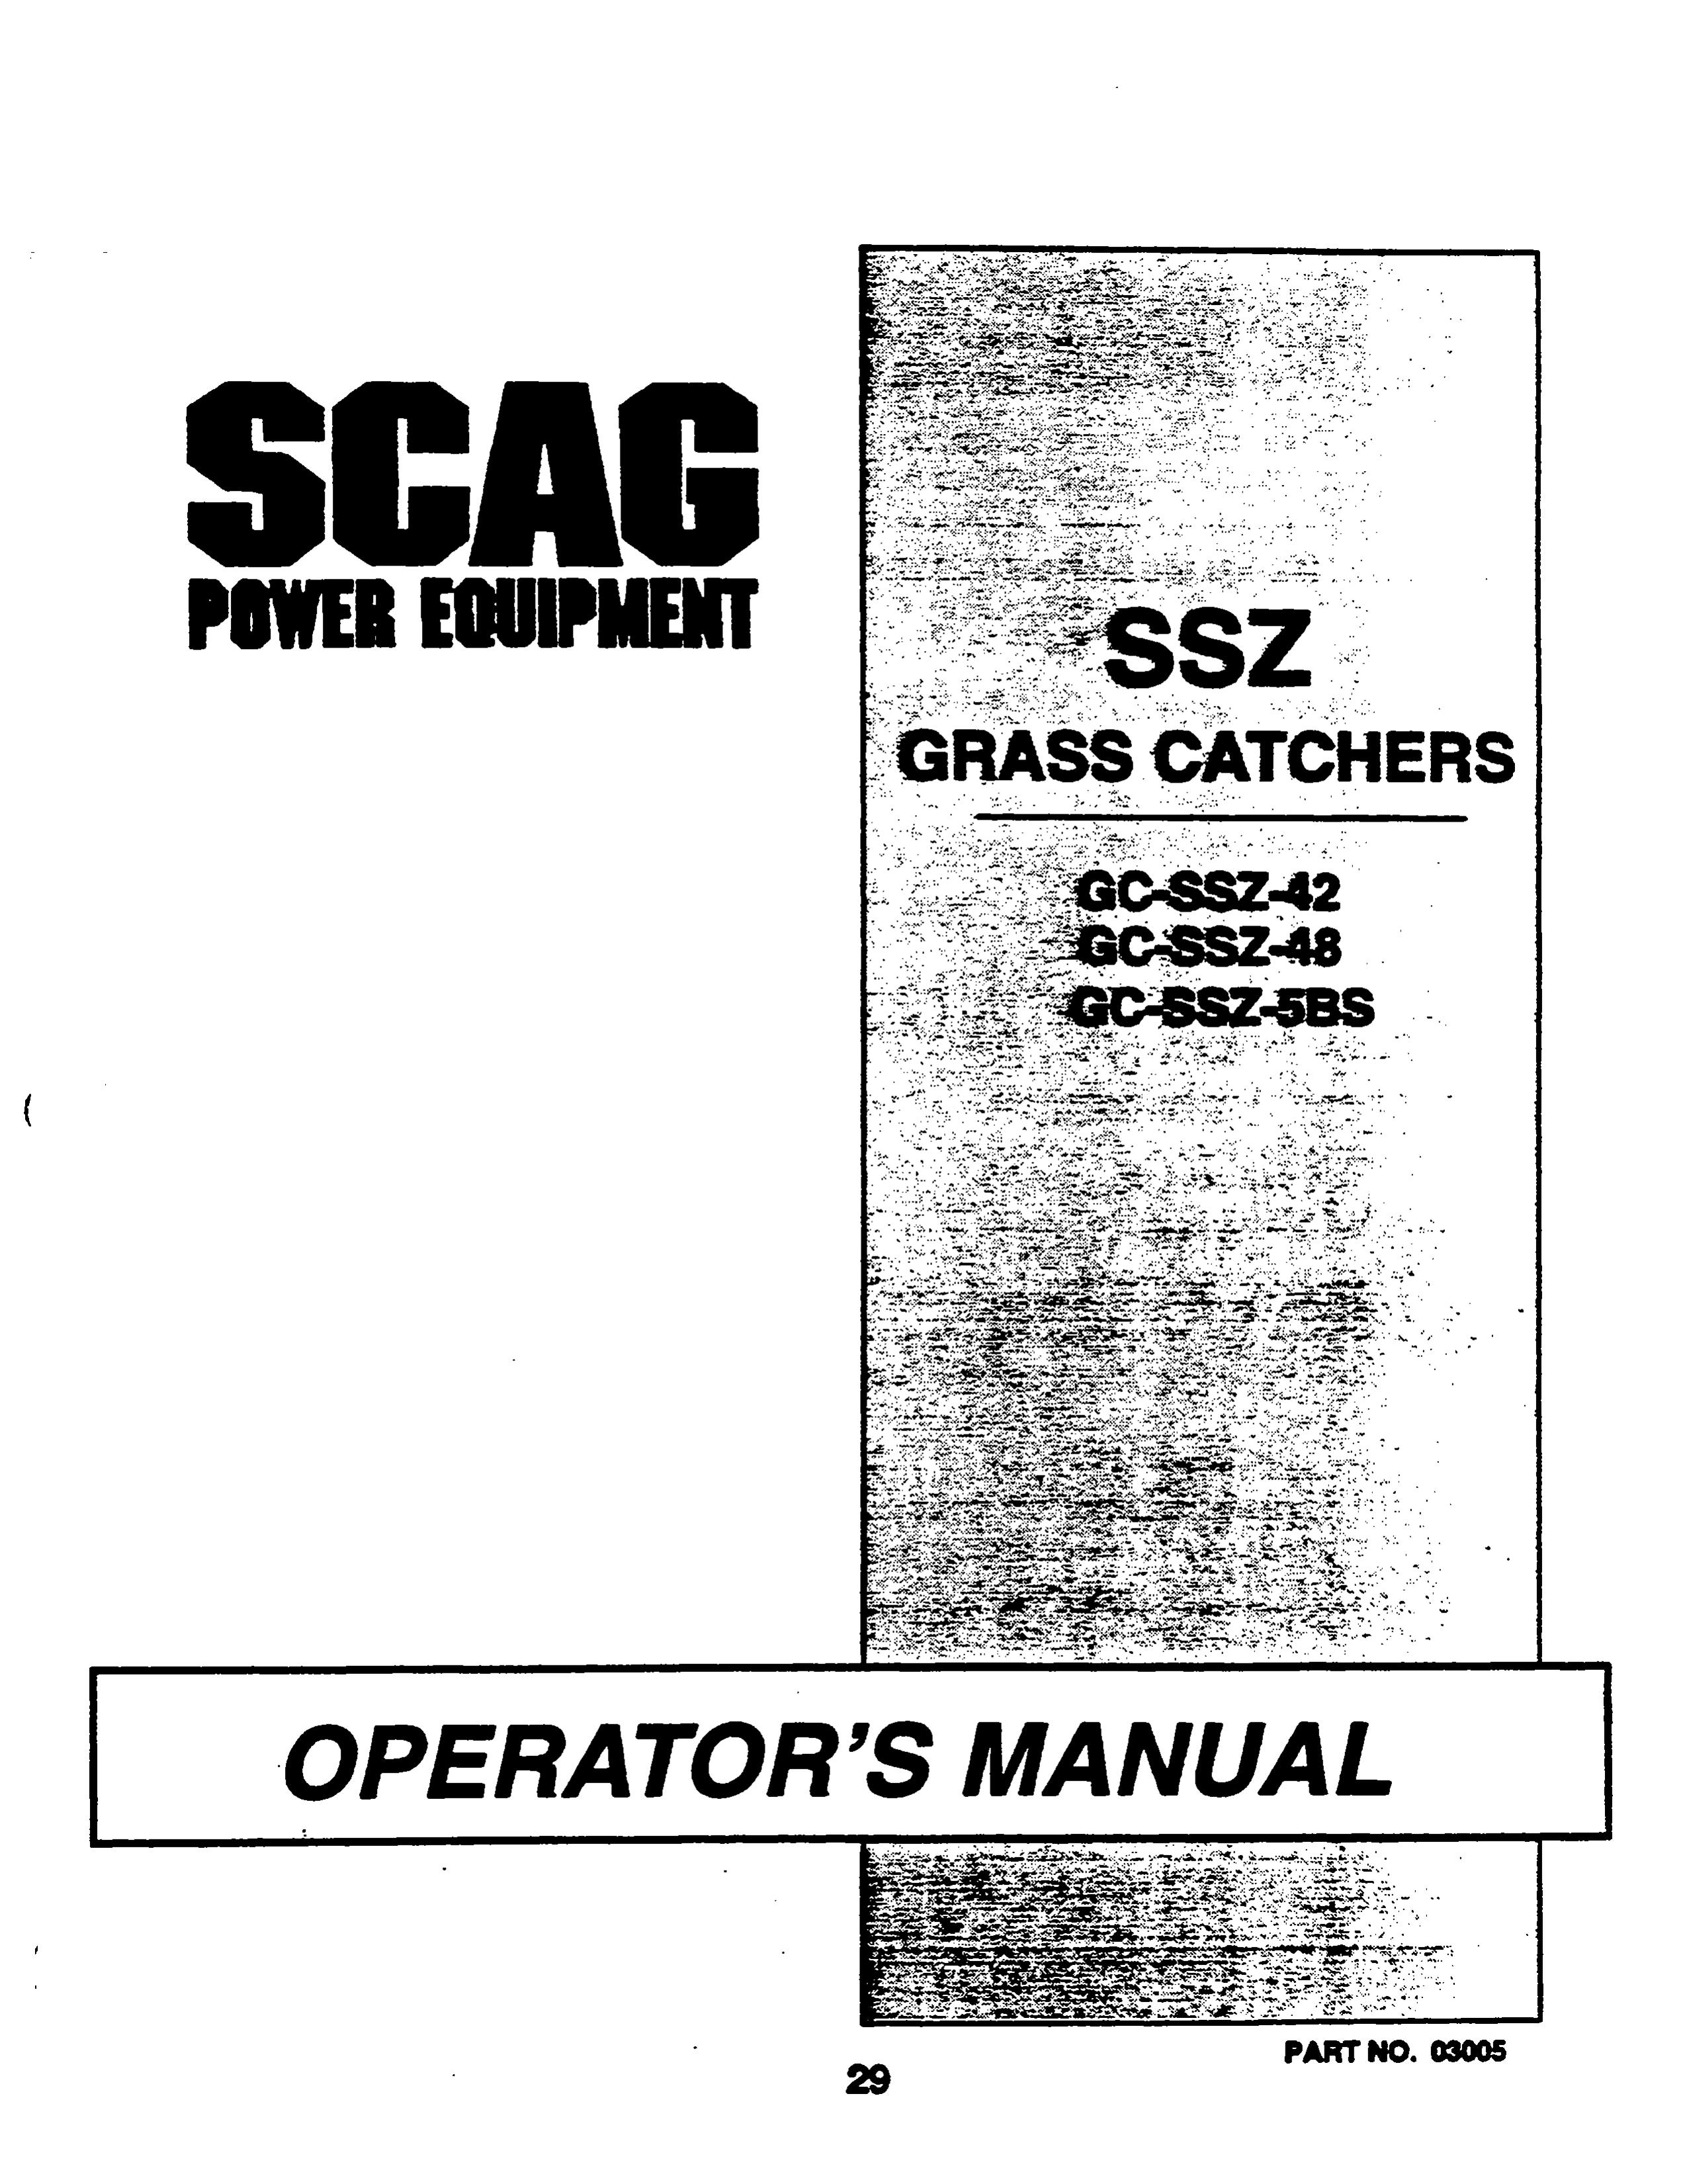 Scag Power Equipment GC-SSZ-48 Trimmer User Manual